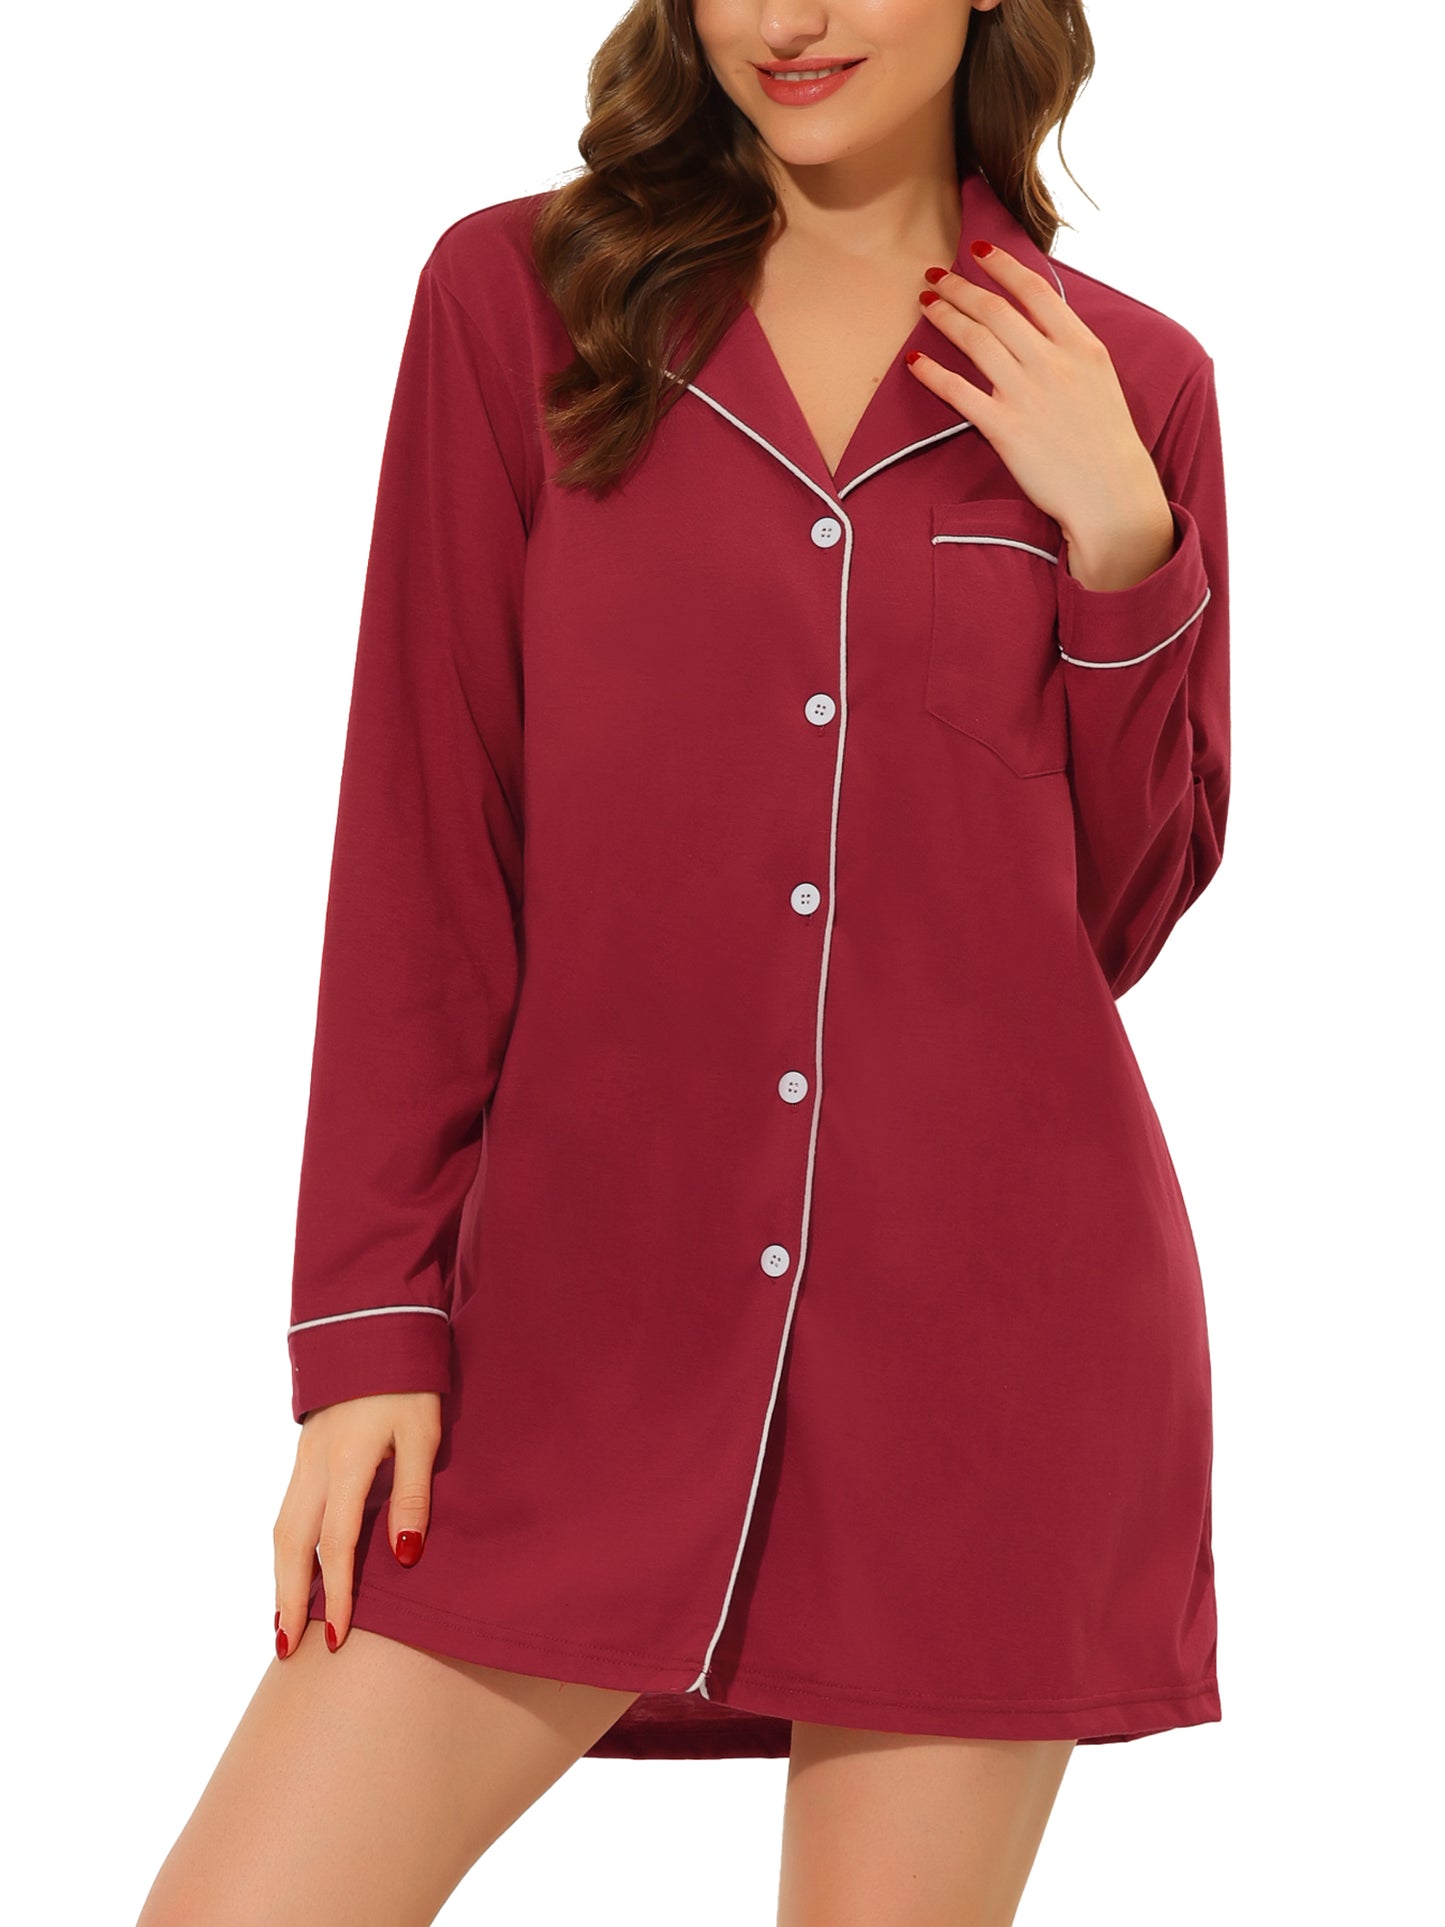 cheibear Pajamas Nightshirt Short Sleeves Button Down Shirt Dress Red